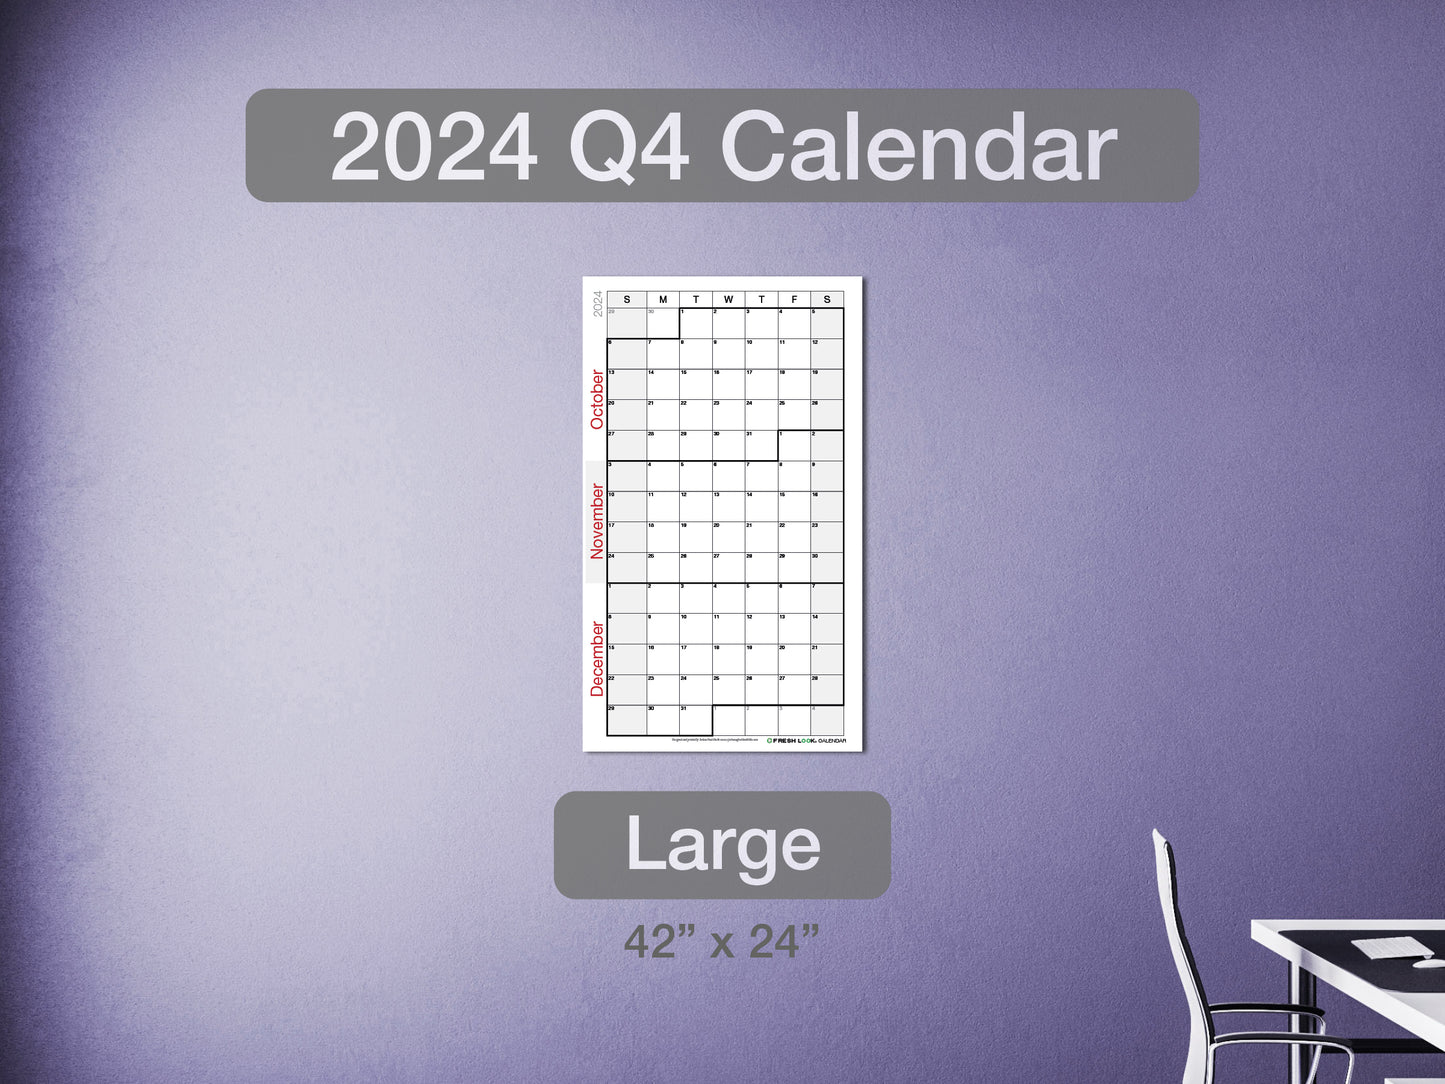 2024 Q4 Calendar Large